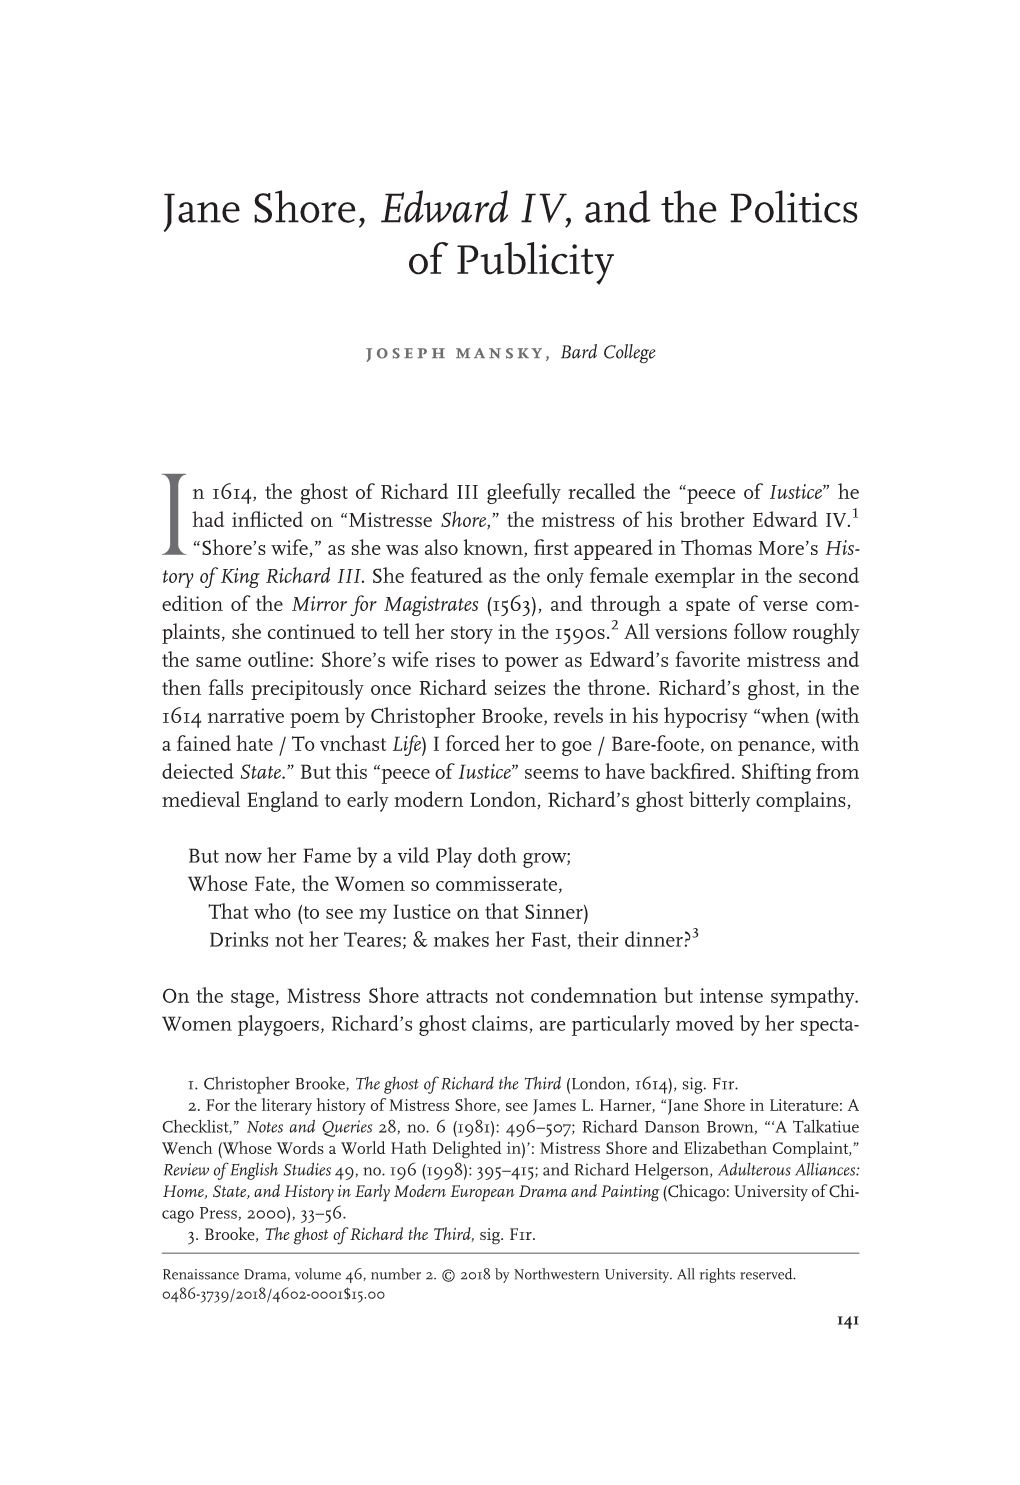 Jane Shore, Edward IV, and the Politics of Publicity